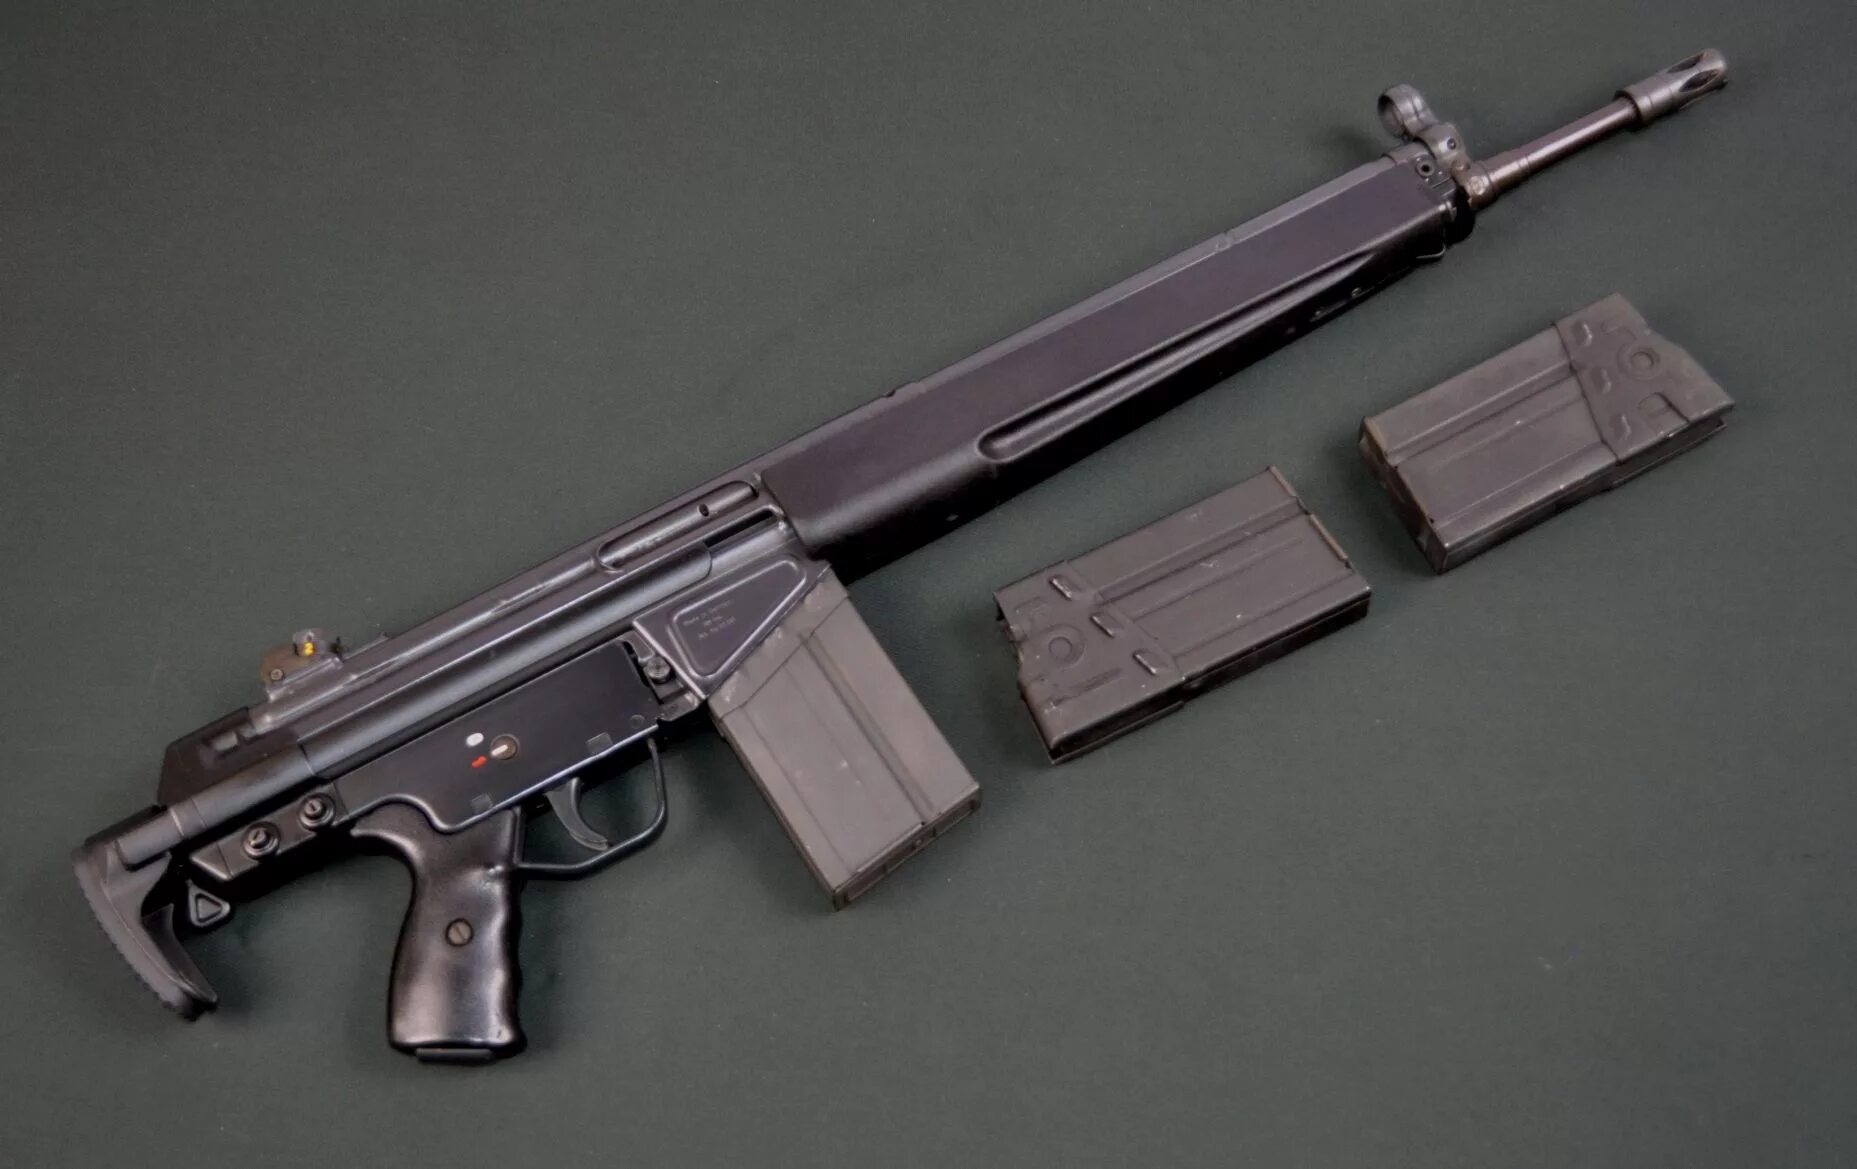 Living gun. HK 91. Hk91a3. HK 92.